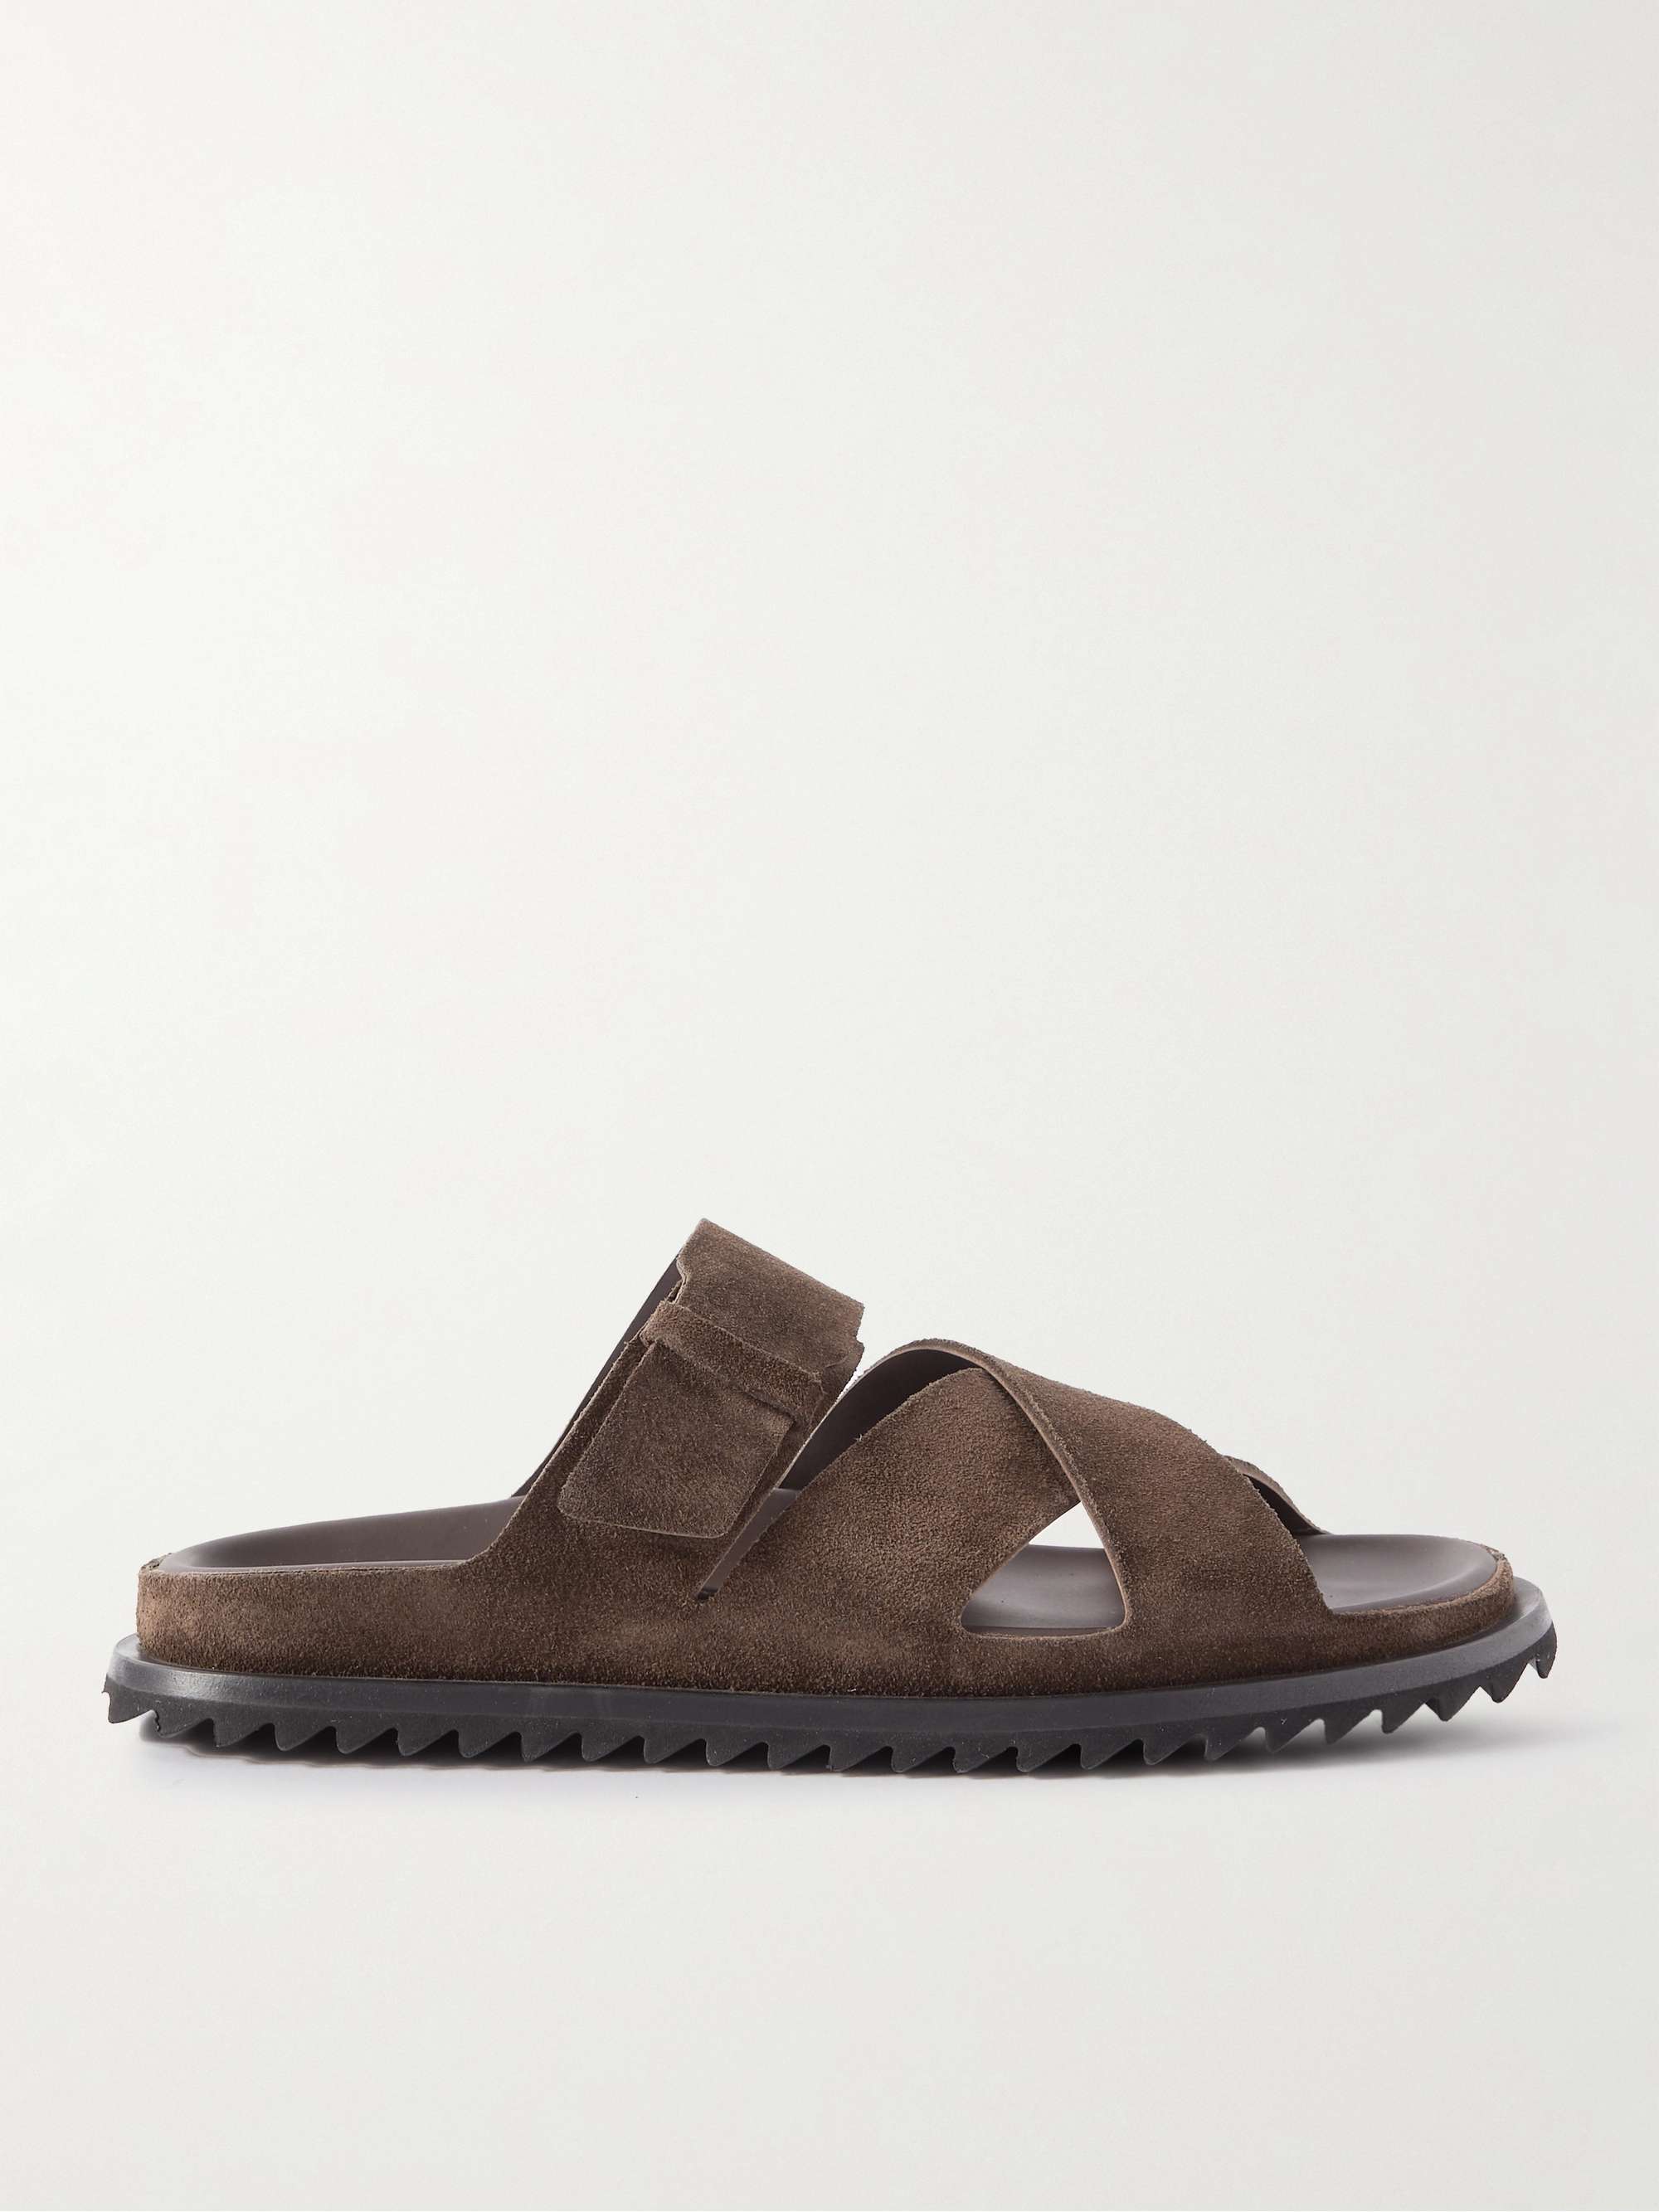 Brown Introspectus Leather Sandals | OFFICINE CREATIVE | MR PORTER